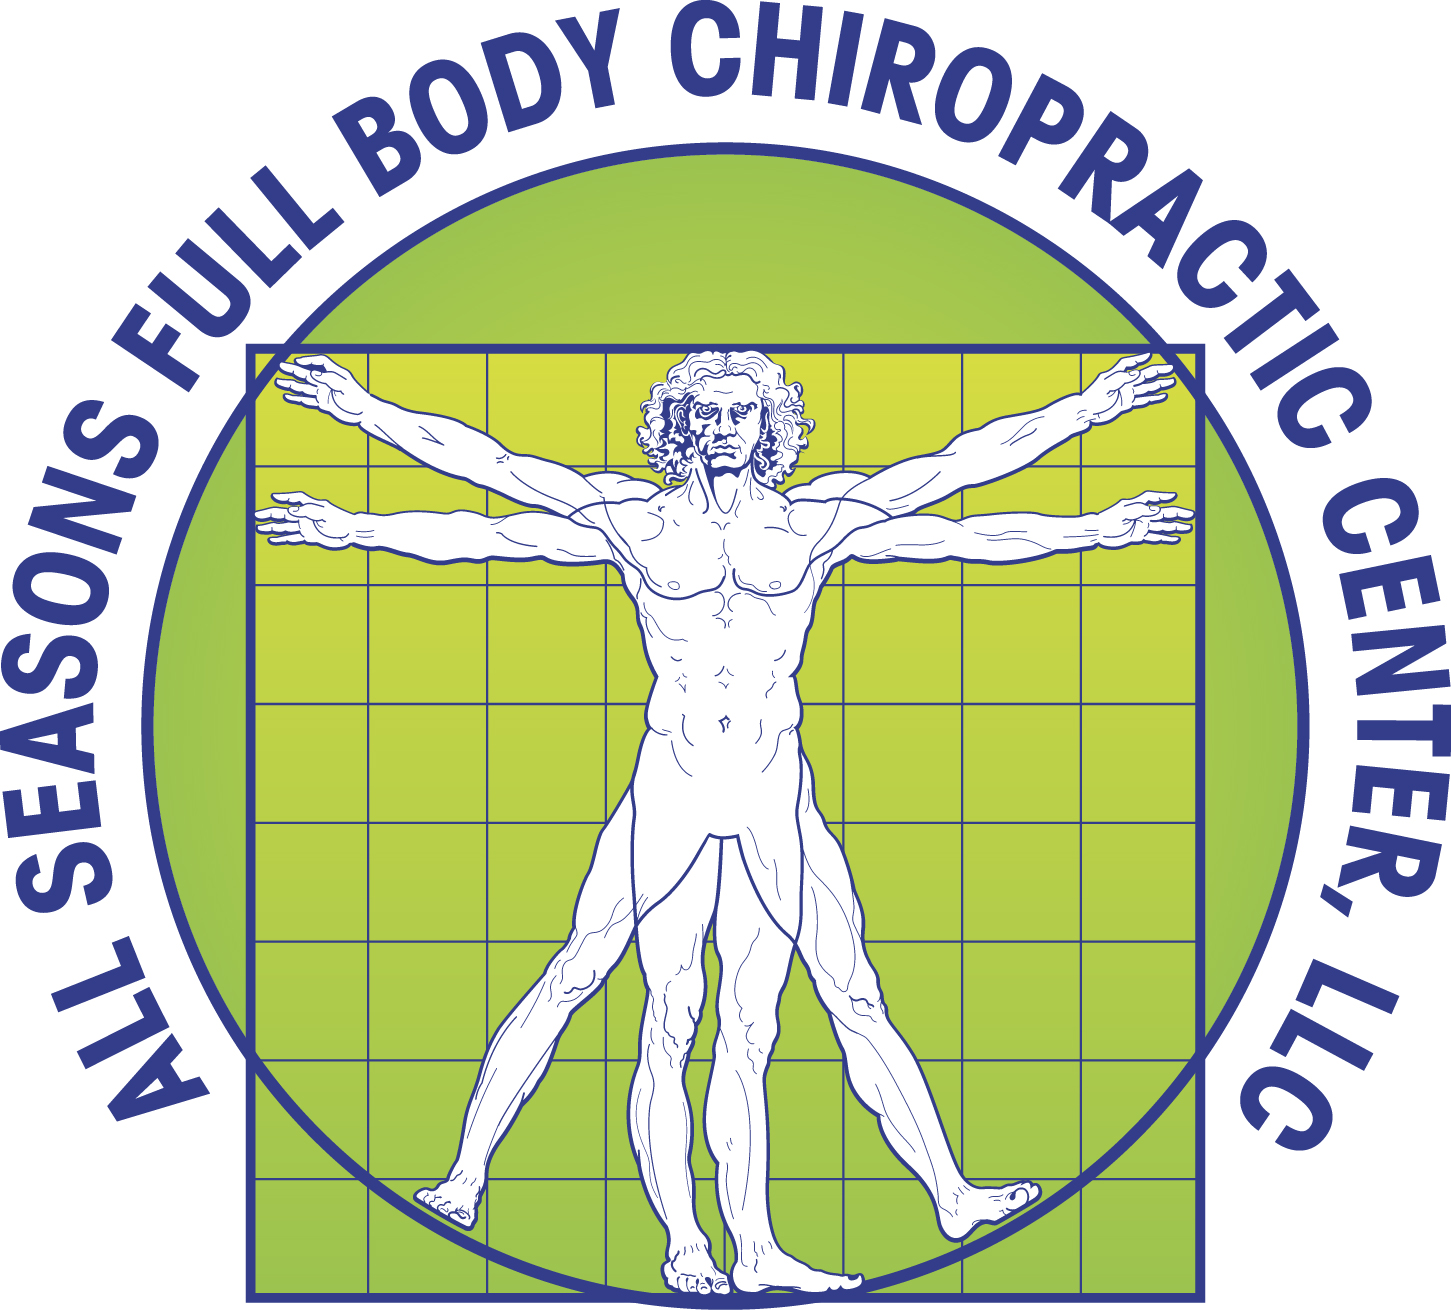 All Seasons Full Body Chiropractic Center Logo